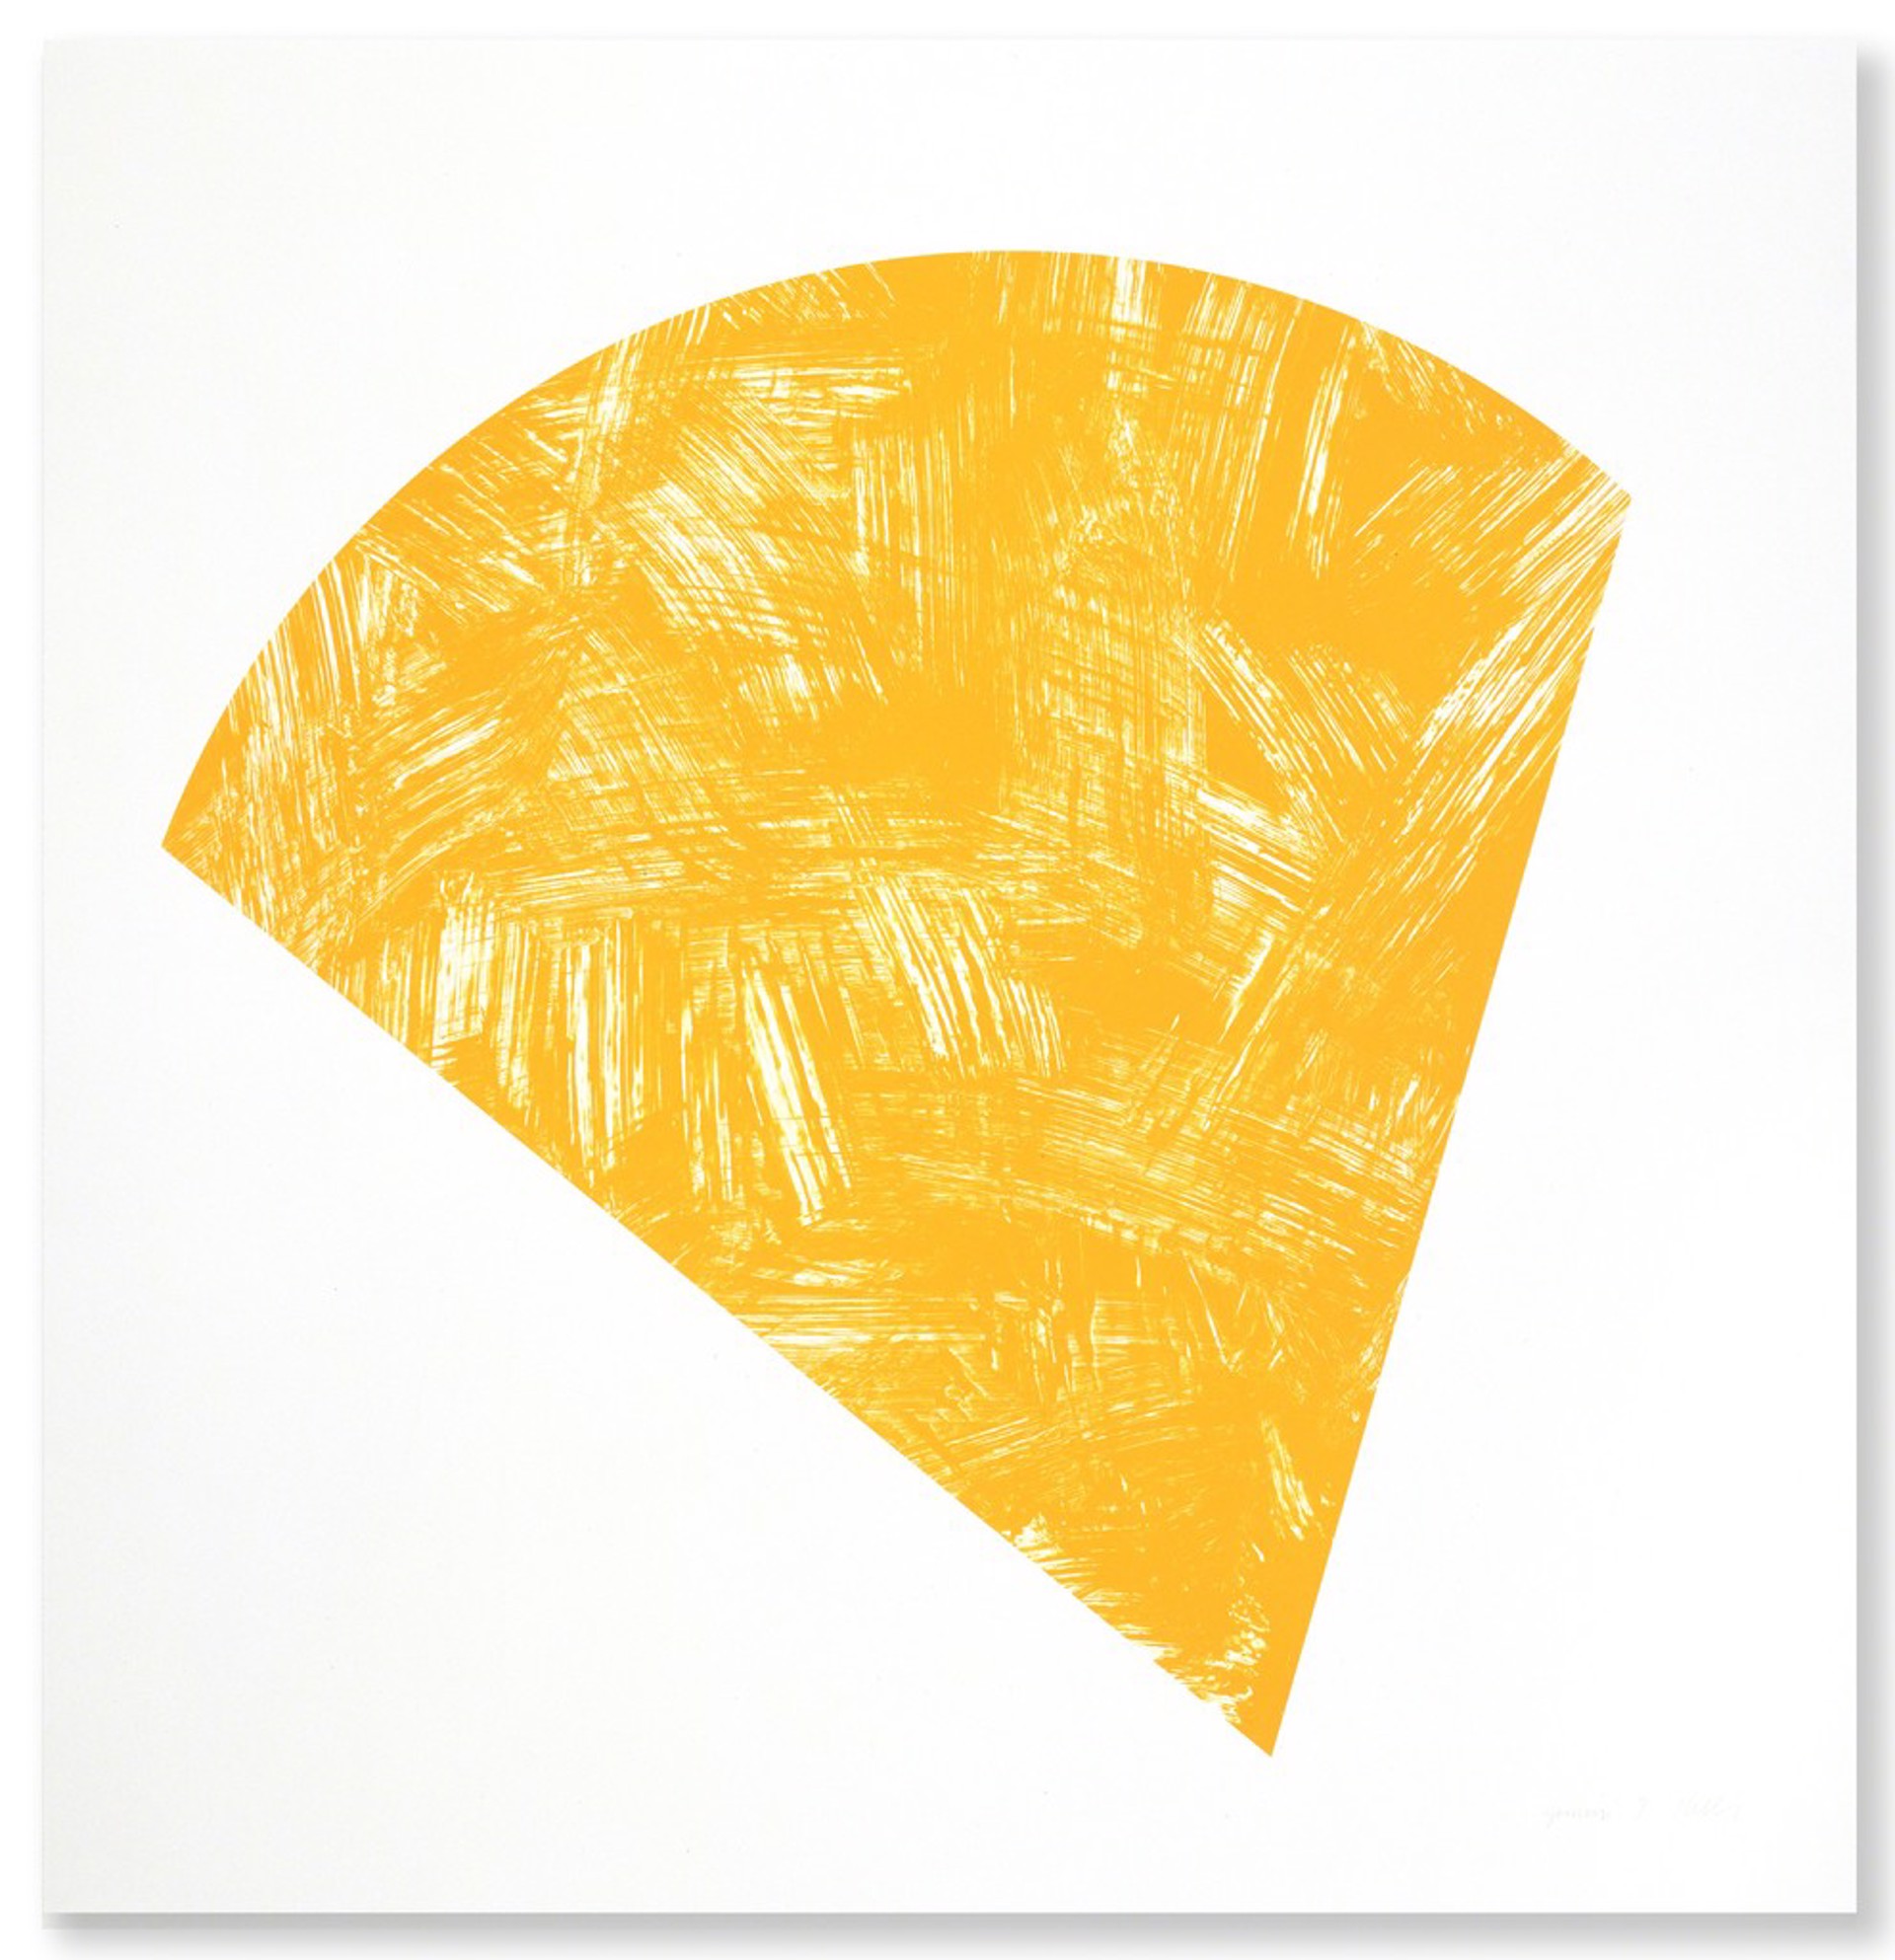 Untitled (Orange State I) by Ellsworth Kelly